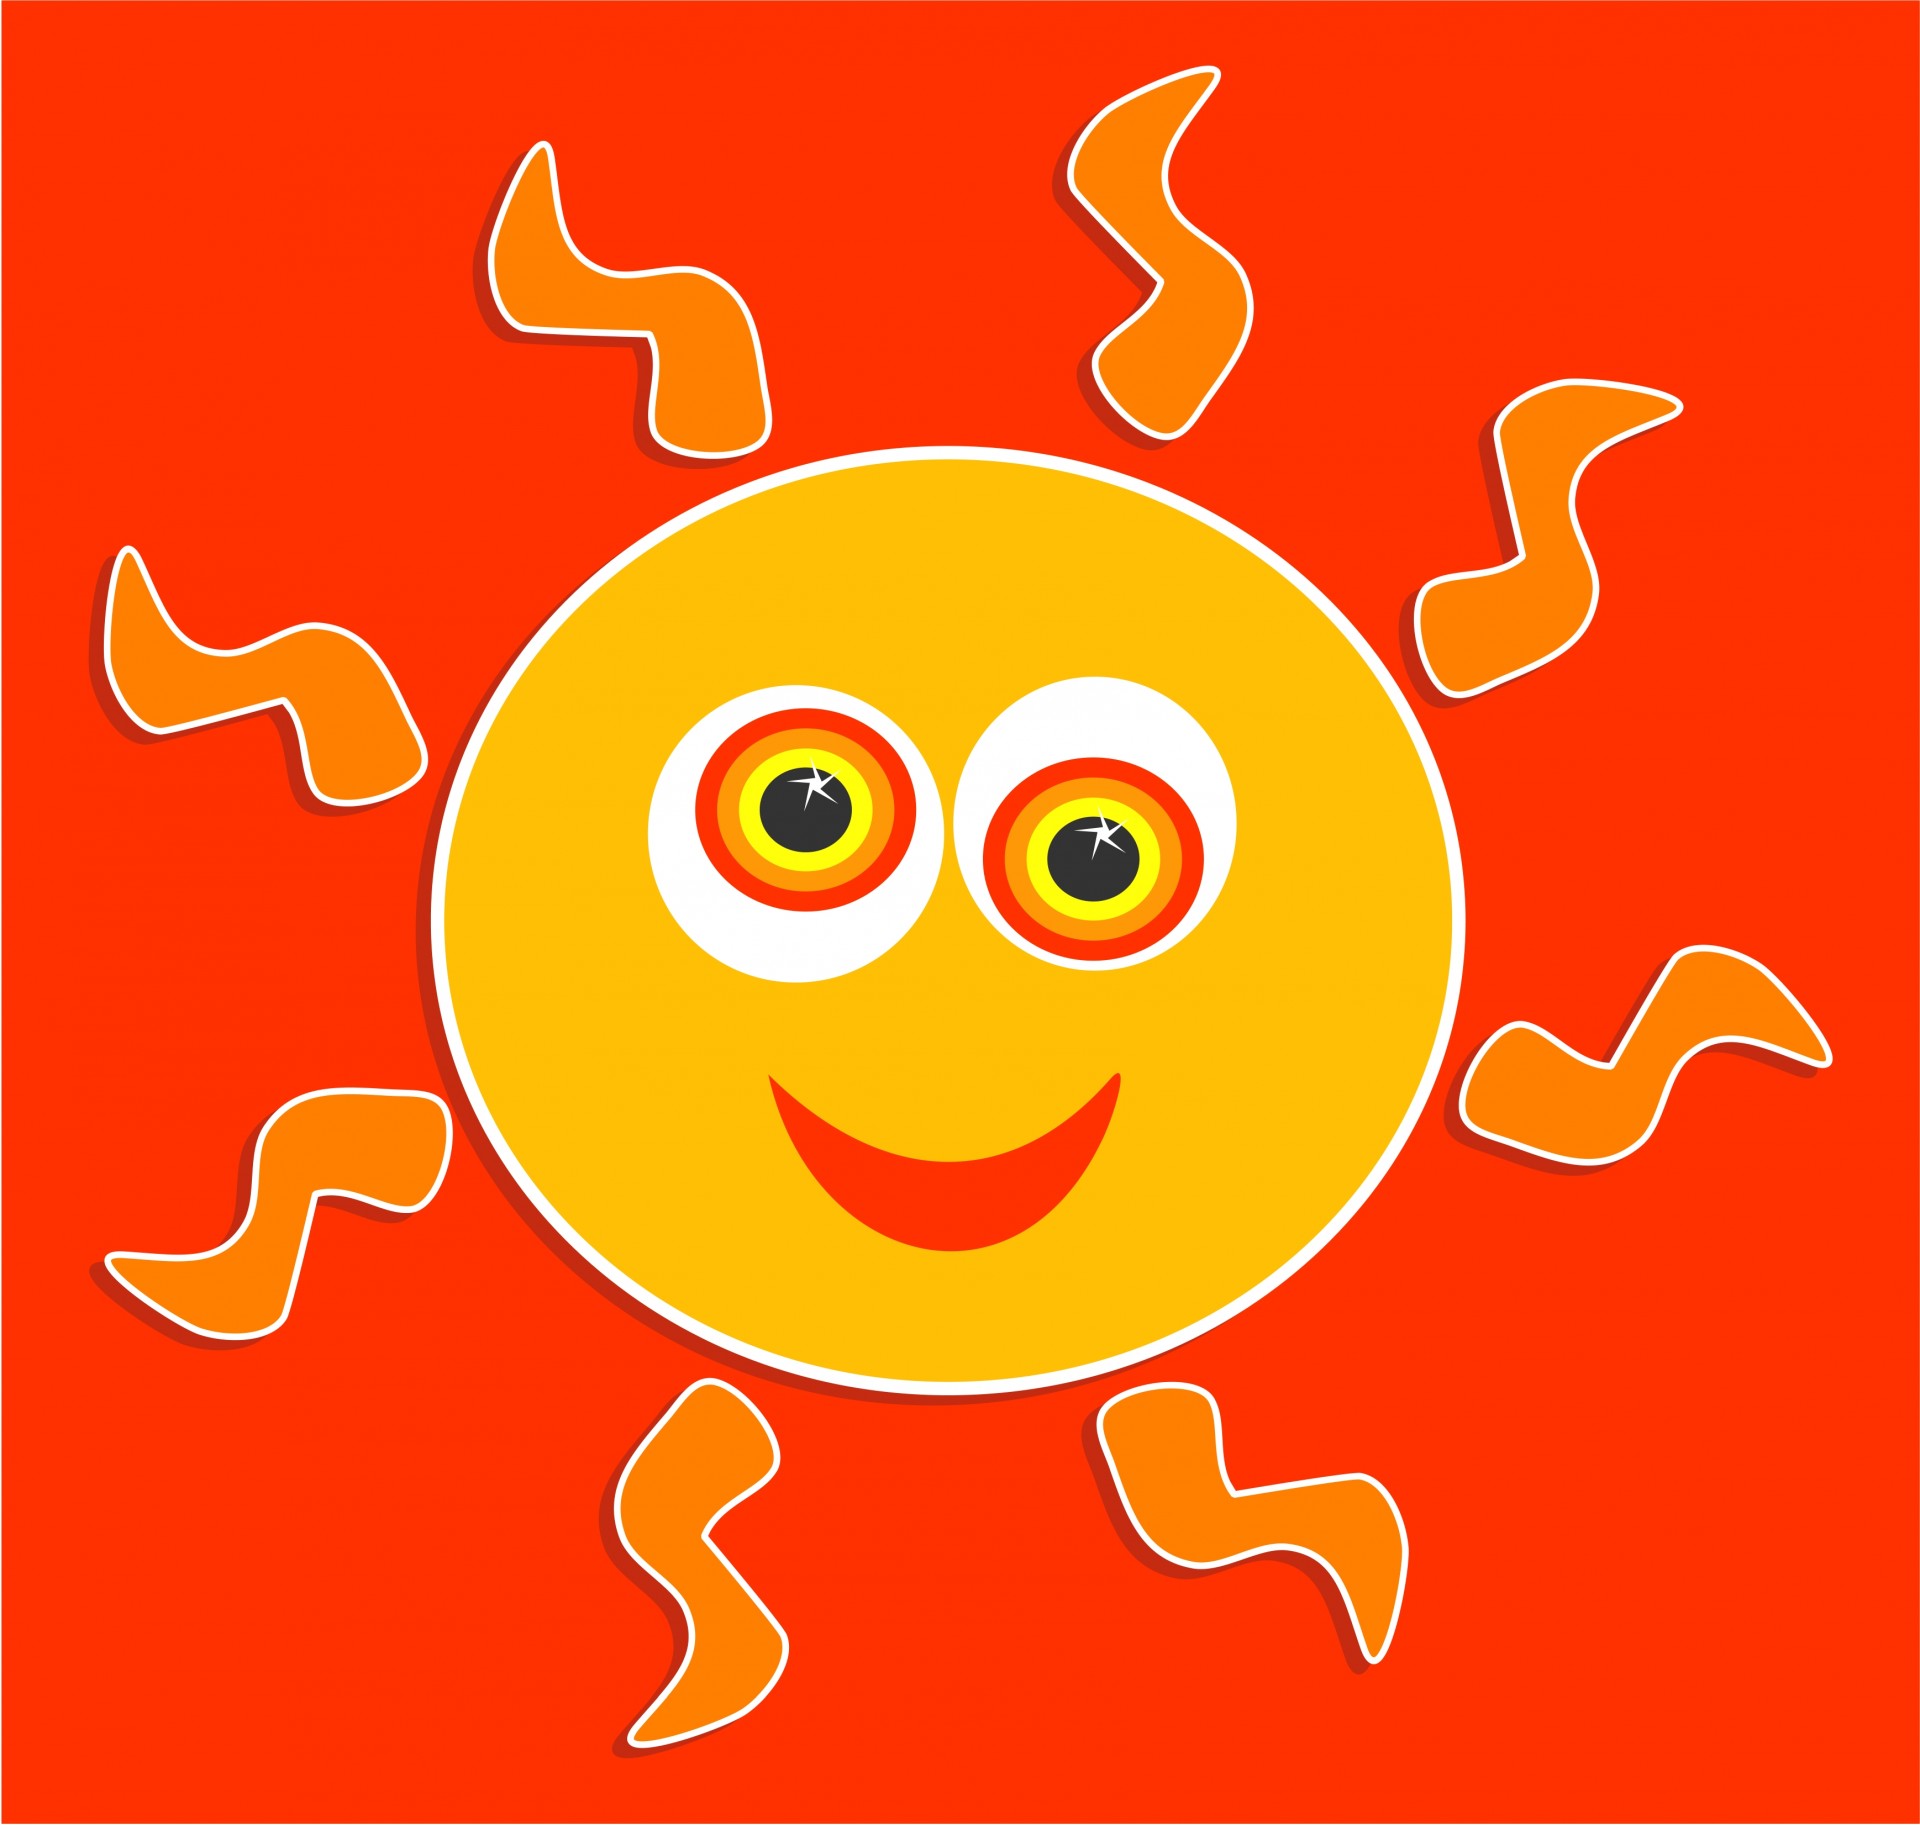 Simple happy sun cartoon clipart, created in xara vector illustration software.